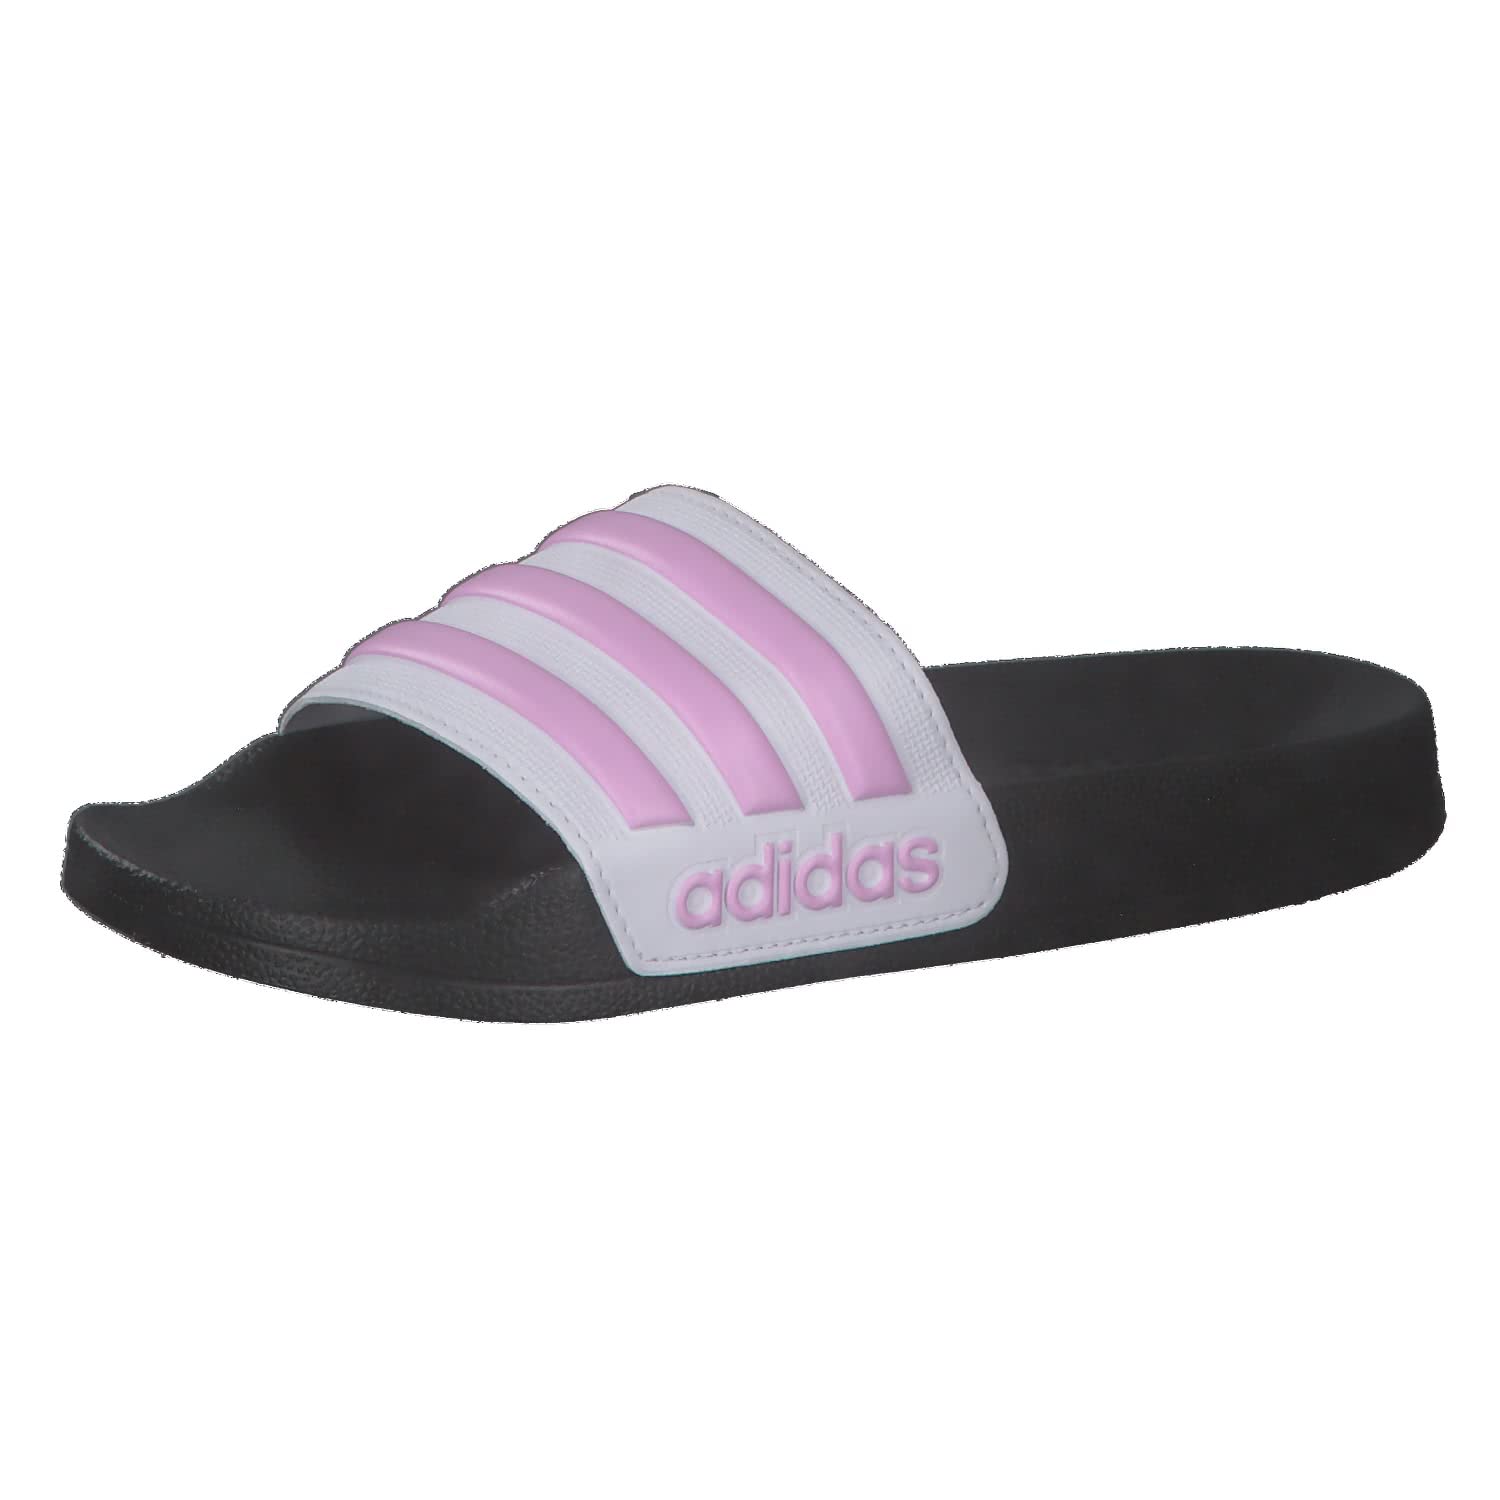 adidas Jungen Adilette Shower Slide Sandal, Cream White Clear Lilac Cloud White, 35 EU